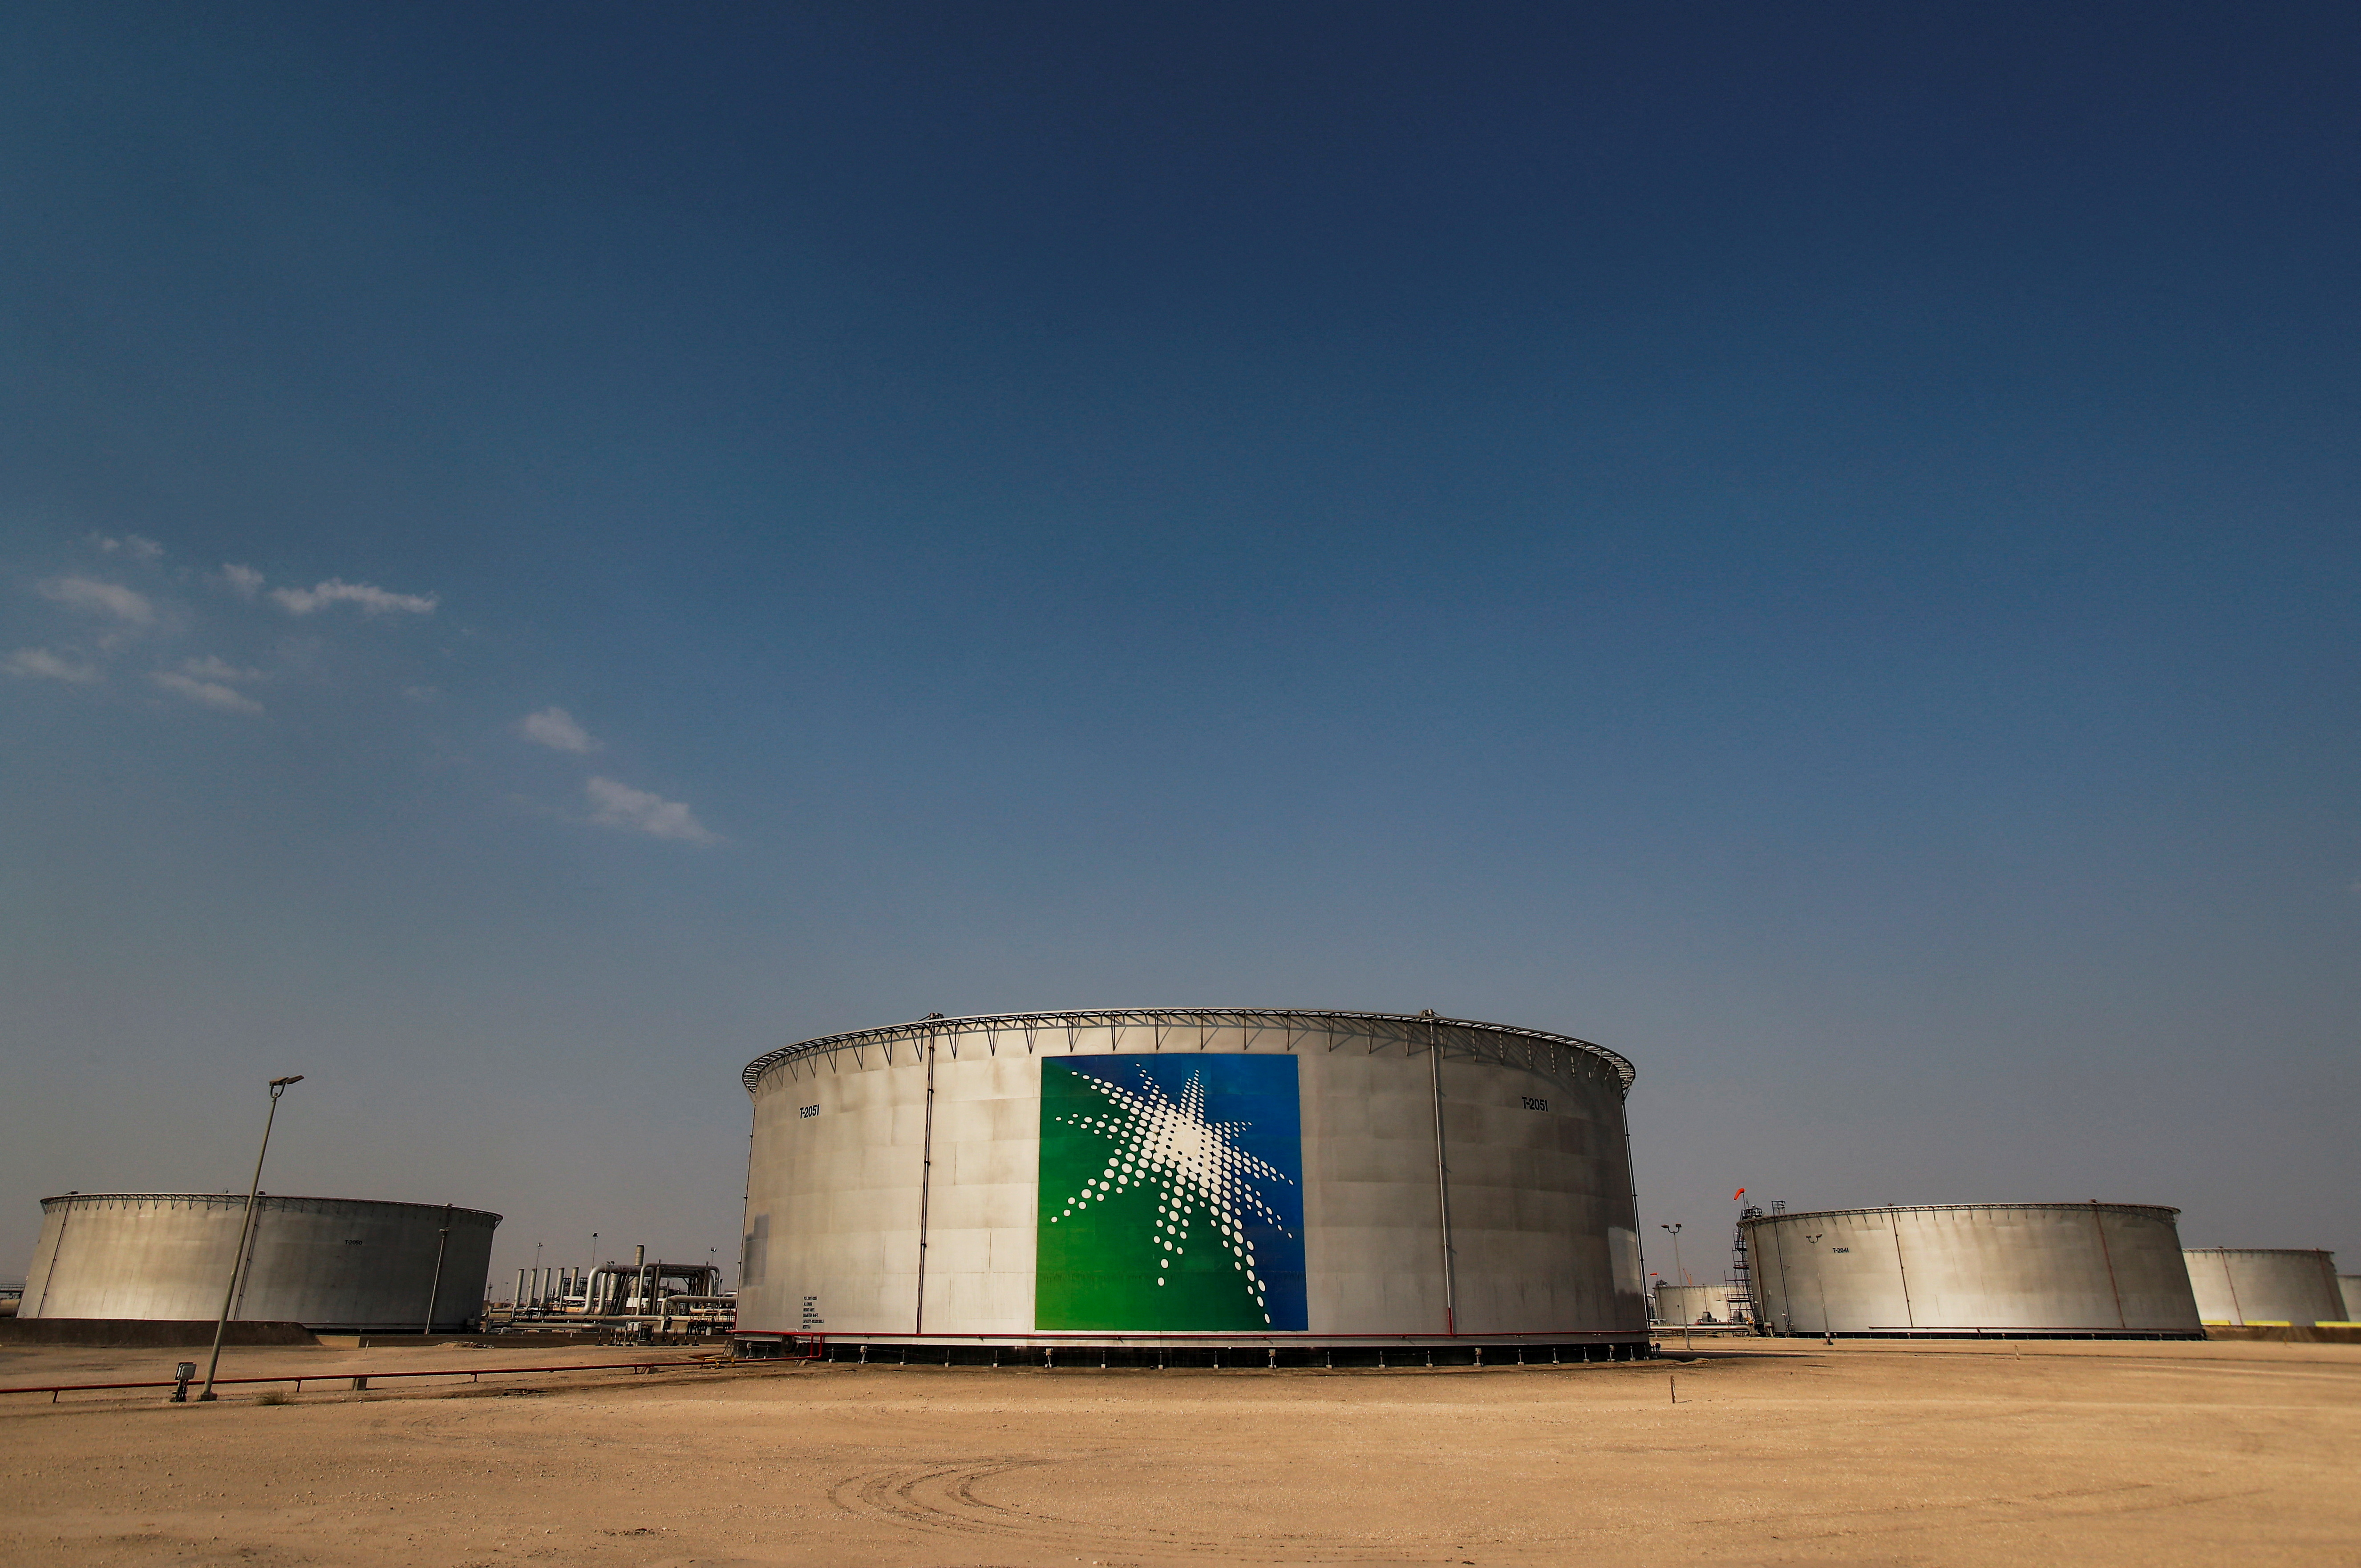 A view shows branded oil tanks at Saudi Aramco oil facility in Abqaiq